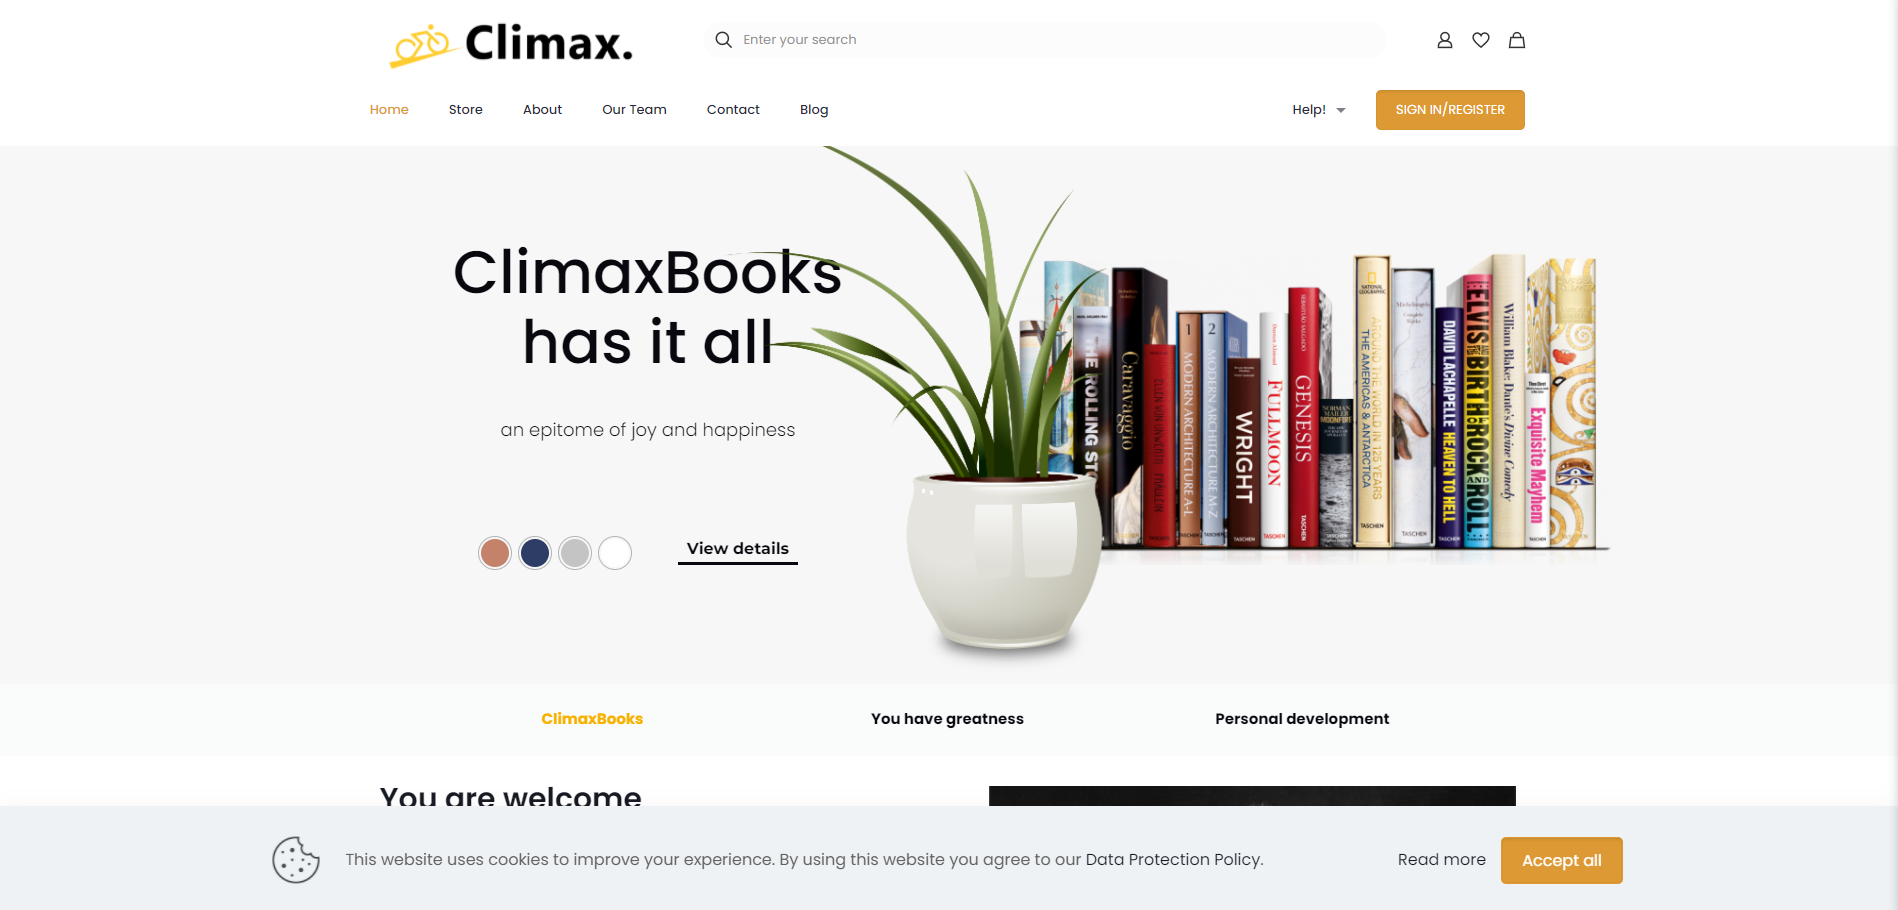 Climax Books